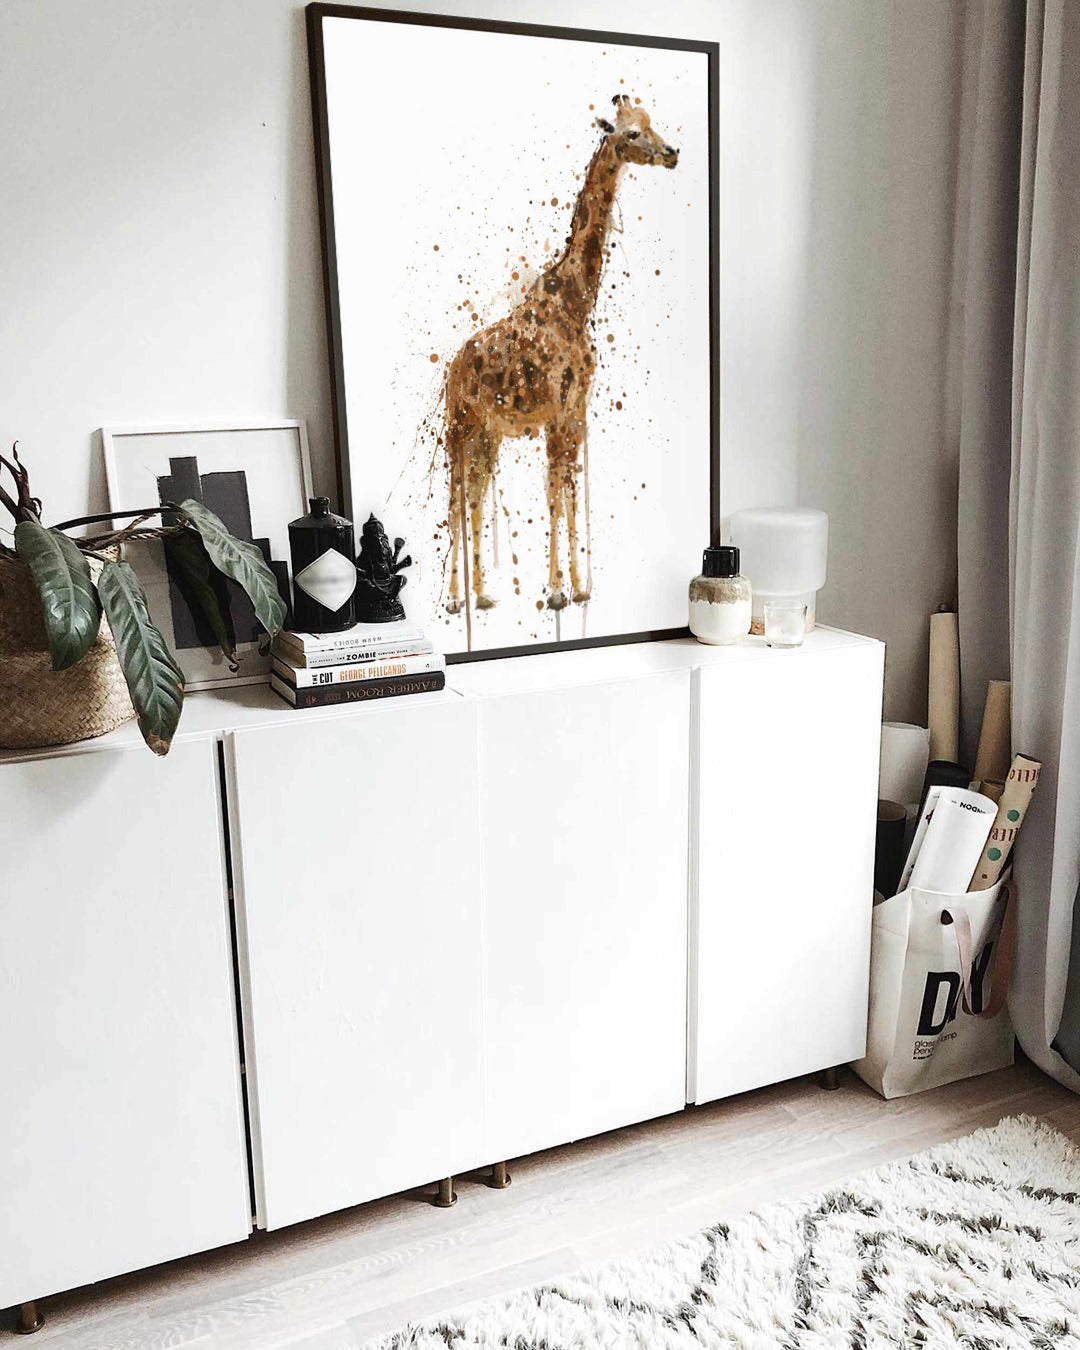 Giraffe-Wand-Kunstdruck